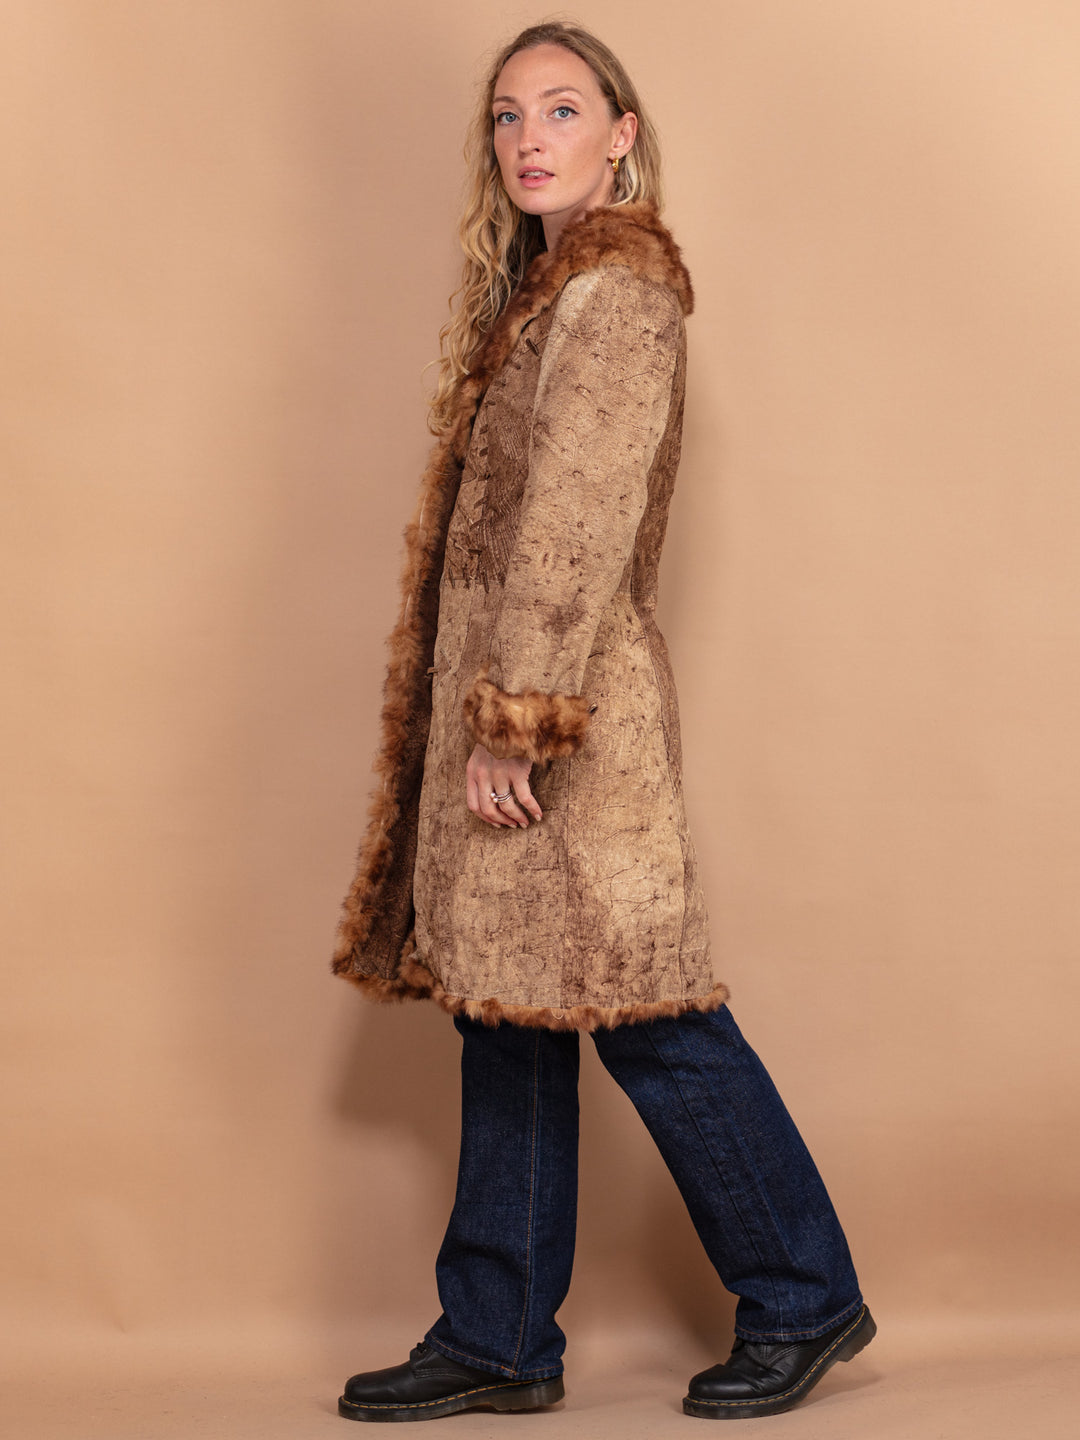 Penny Lane Fur Coat, Size Small S Brown Fur Coat, 90s Luxurious Coat, Retro Fur Overcoat, Glamour Fur Coat, Retro Suede Coat, Pre Loved Coat